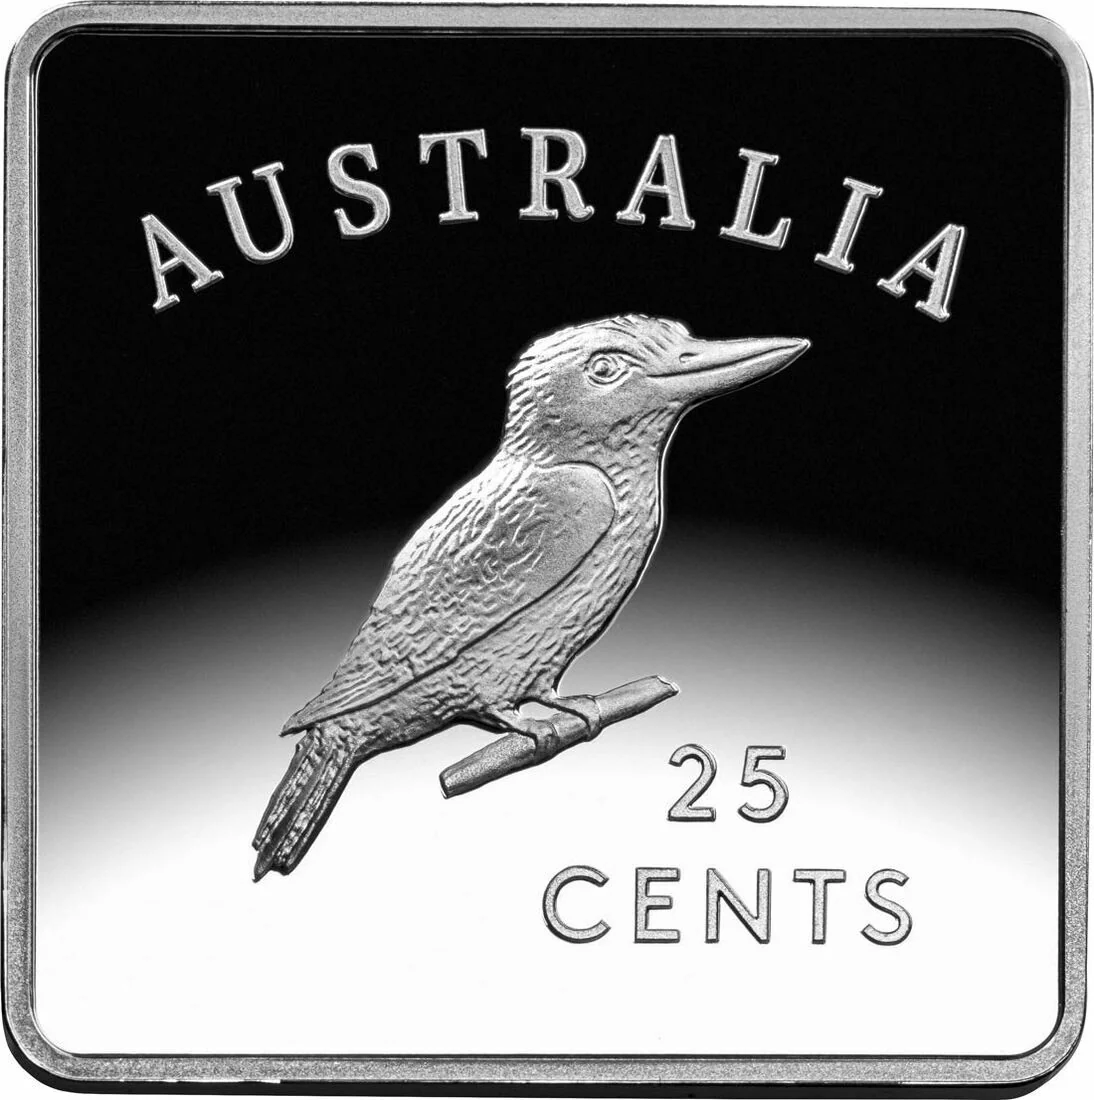 2019 25c Kookaburra Patterns 1919-1921 Fine Silver Proof Coin Set - Obverse View 1